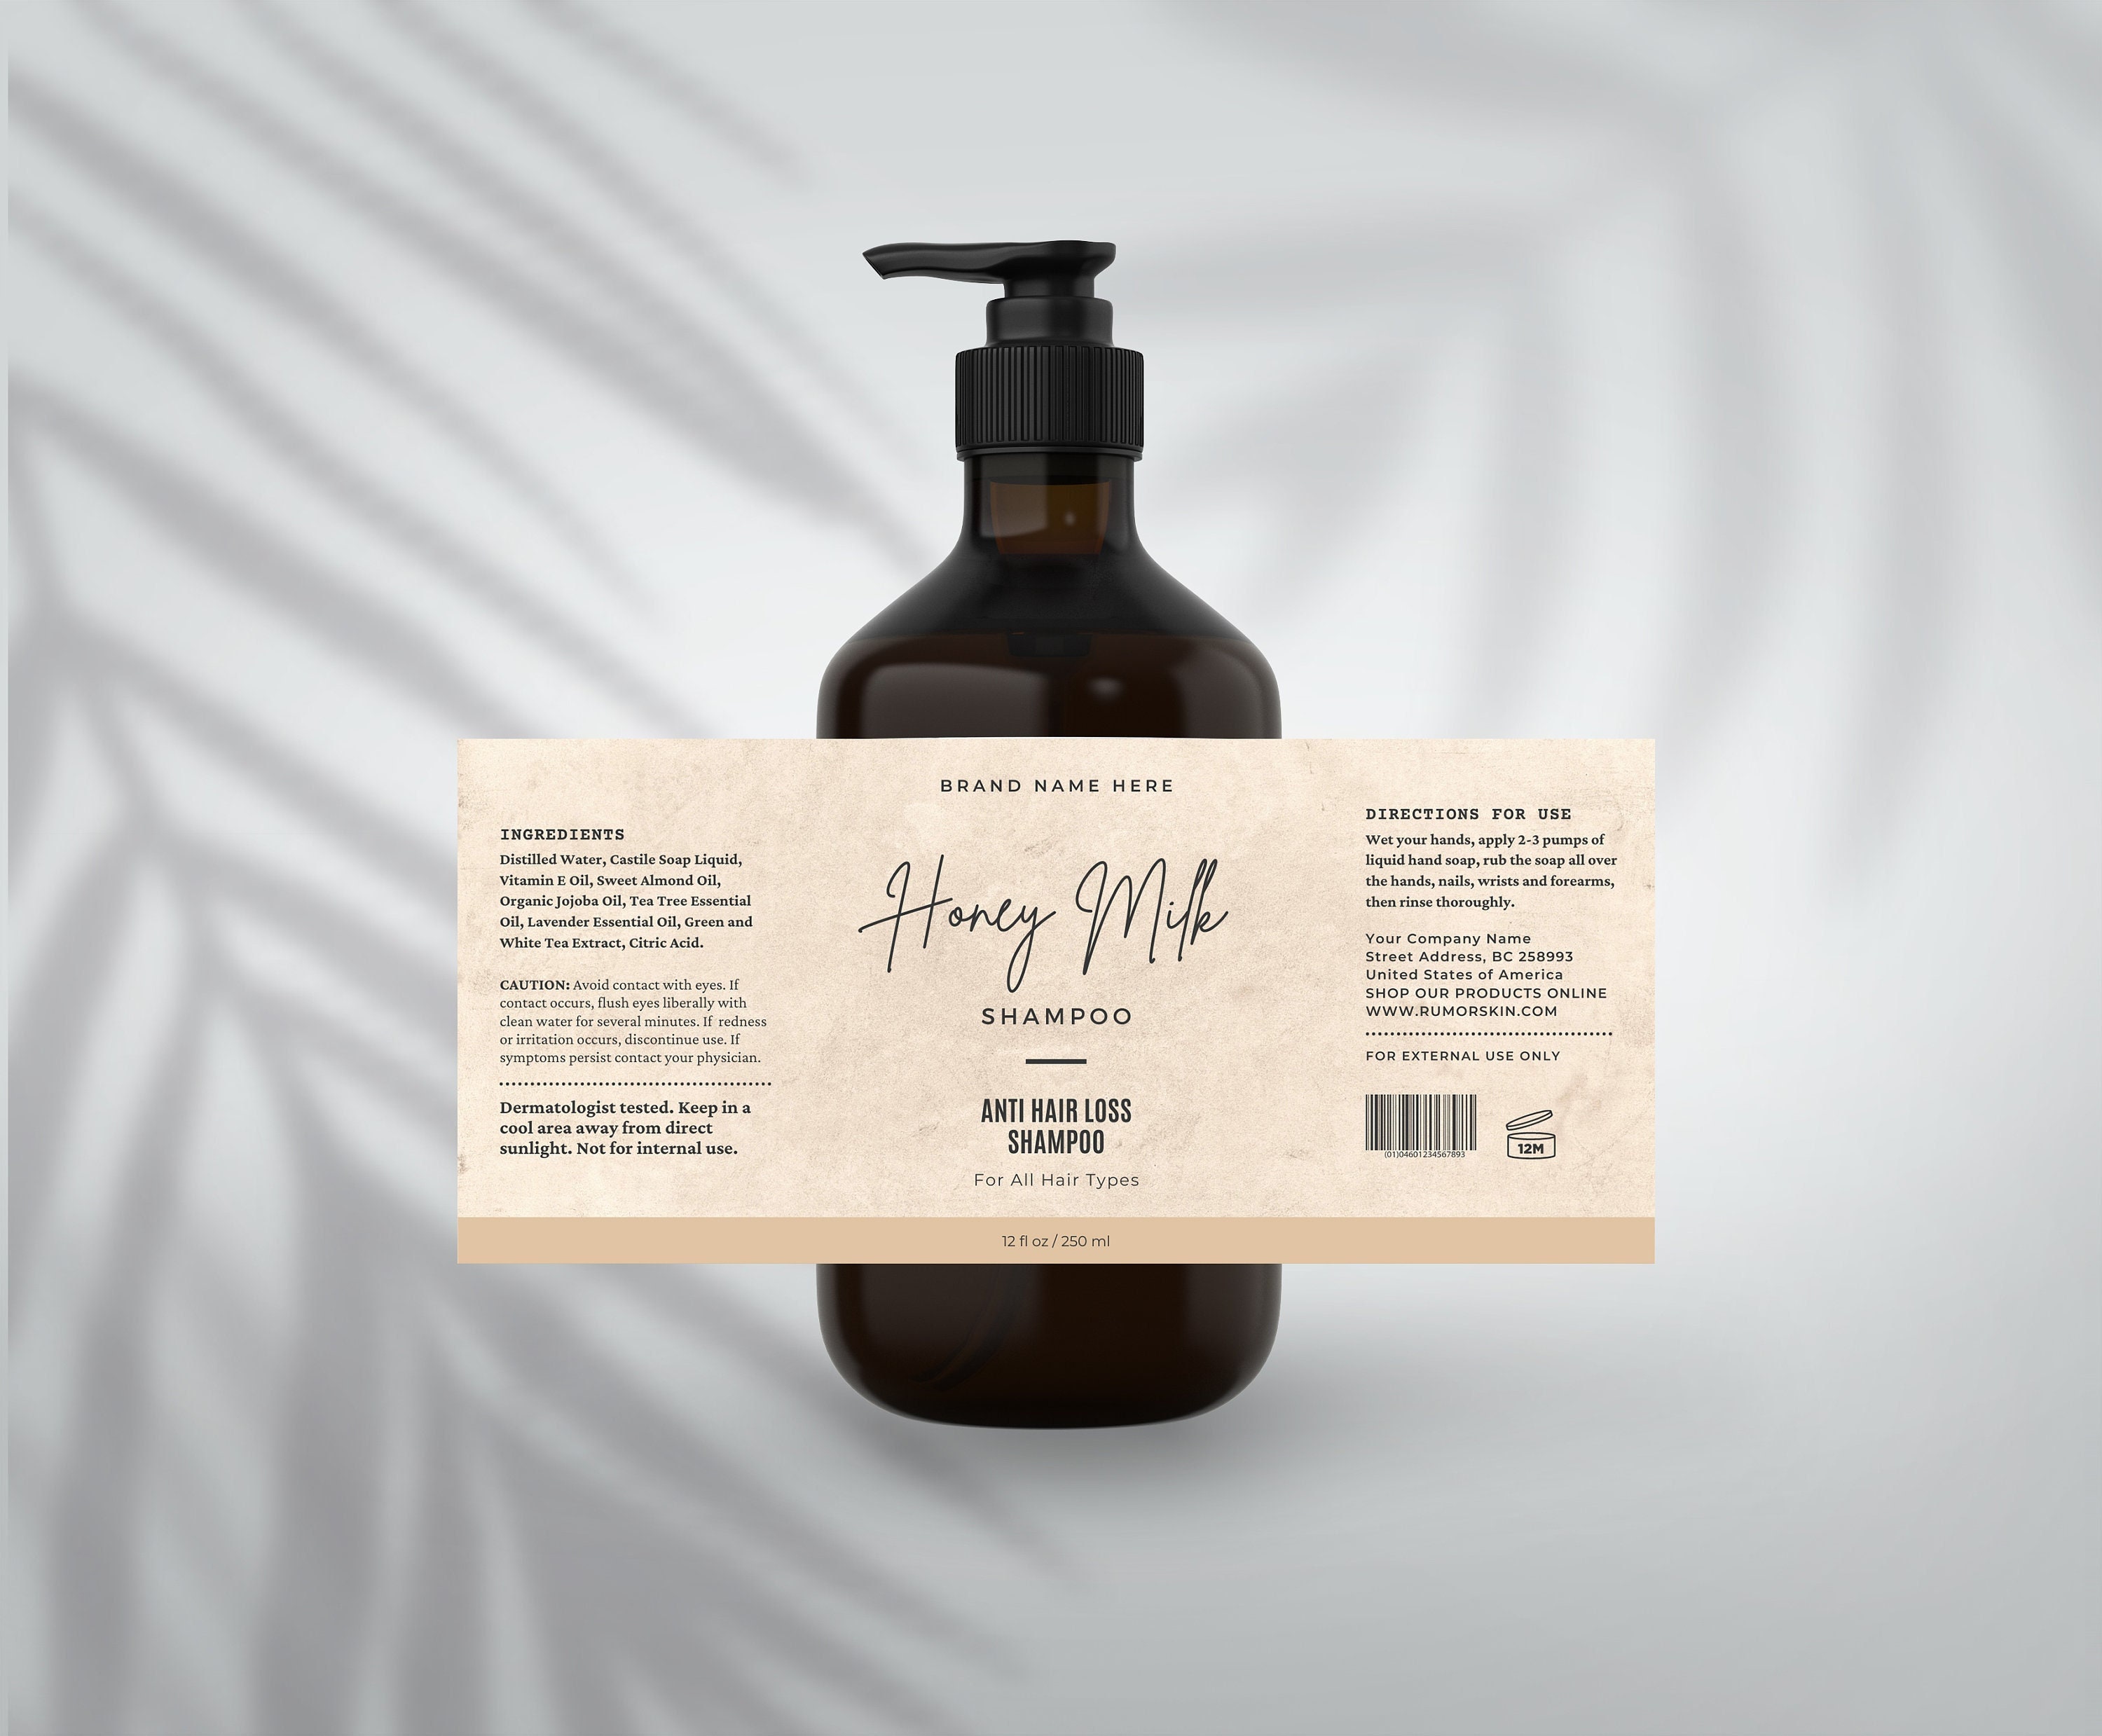 Editable Perfume Label Template - Gold Product Label, Fragrance Label,  Instant Download Label Design, 1.5x2 Label, Spray Bottle Label